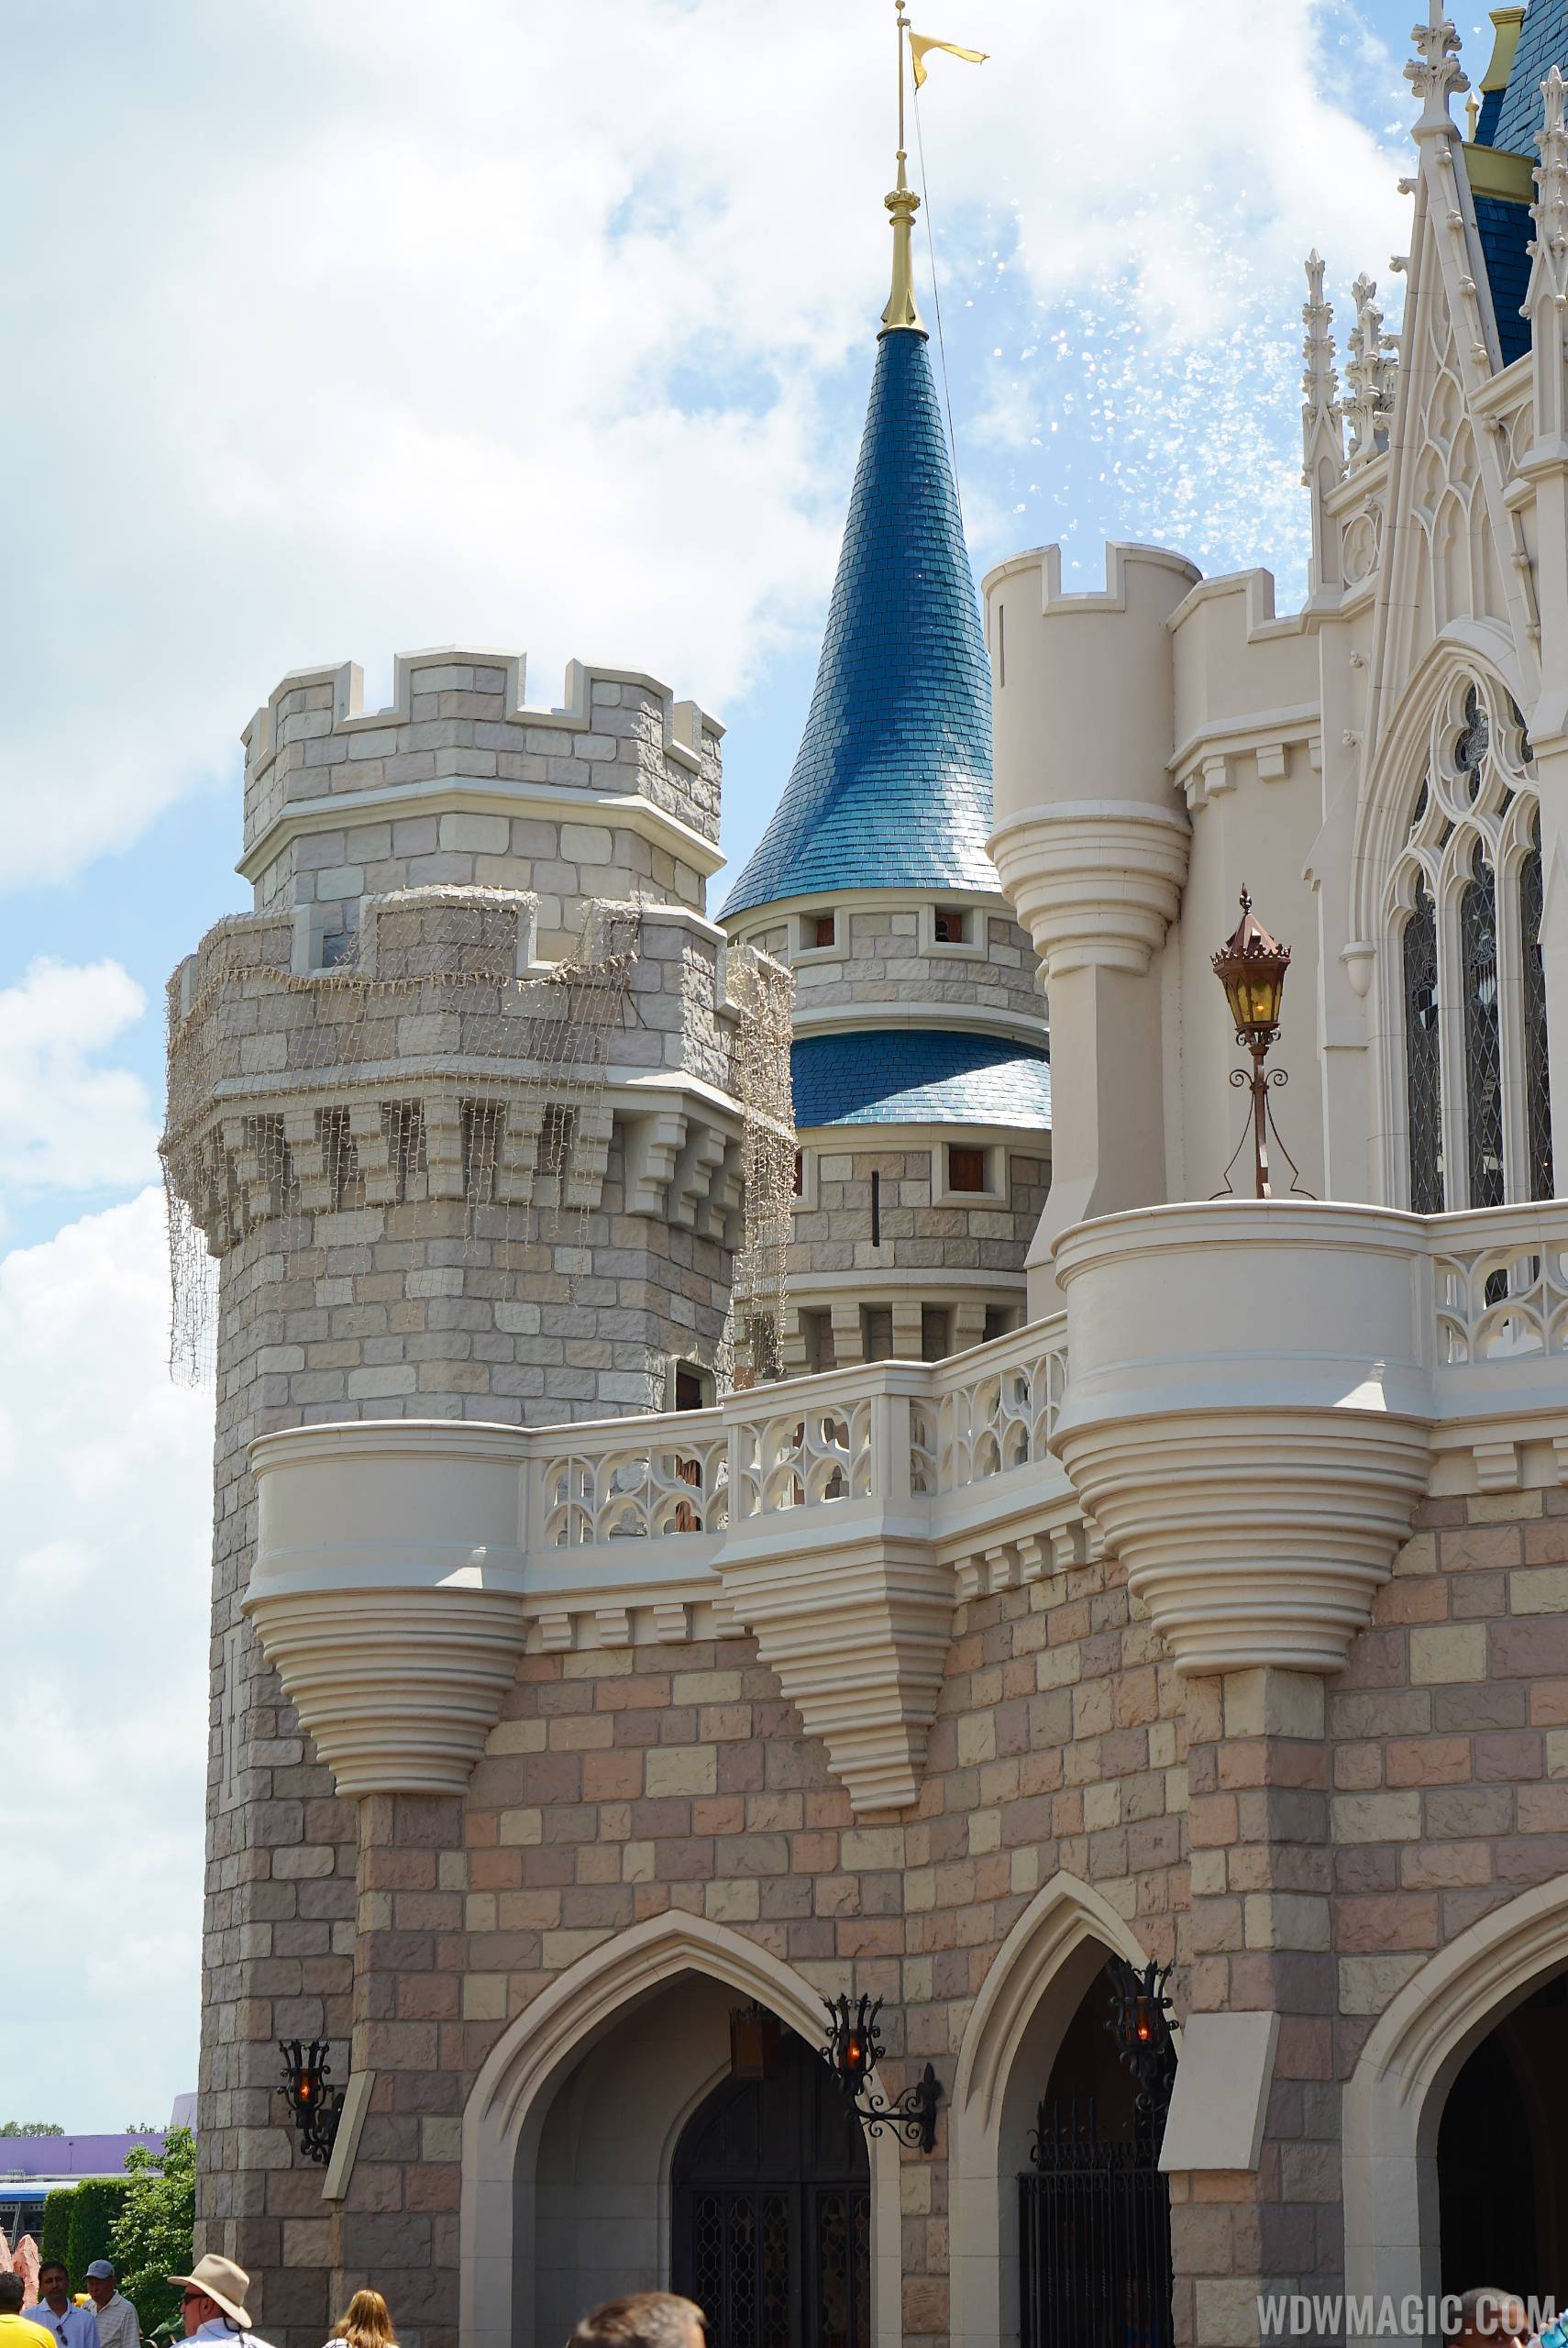 PHOTOS - Castle Dreamlight installation underway at the Magic Kingdom